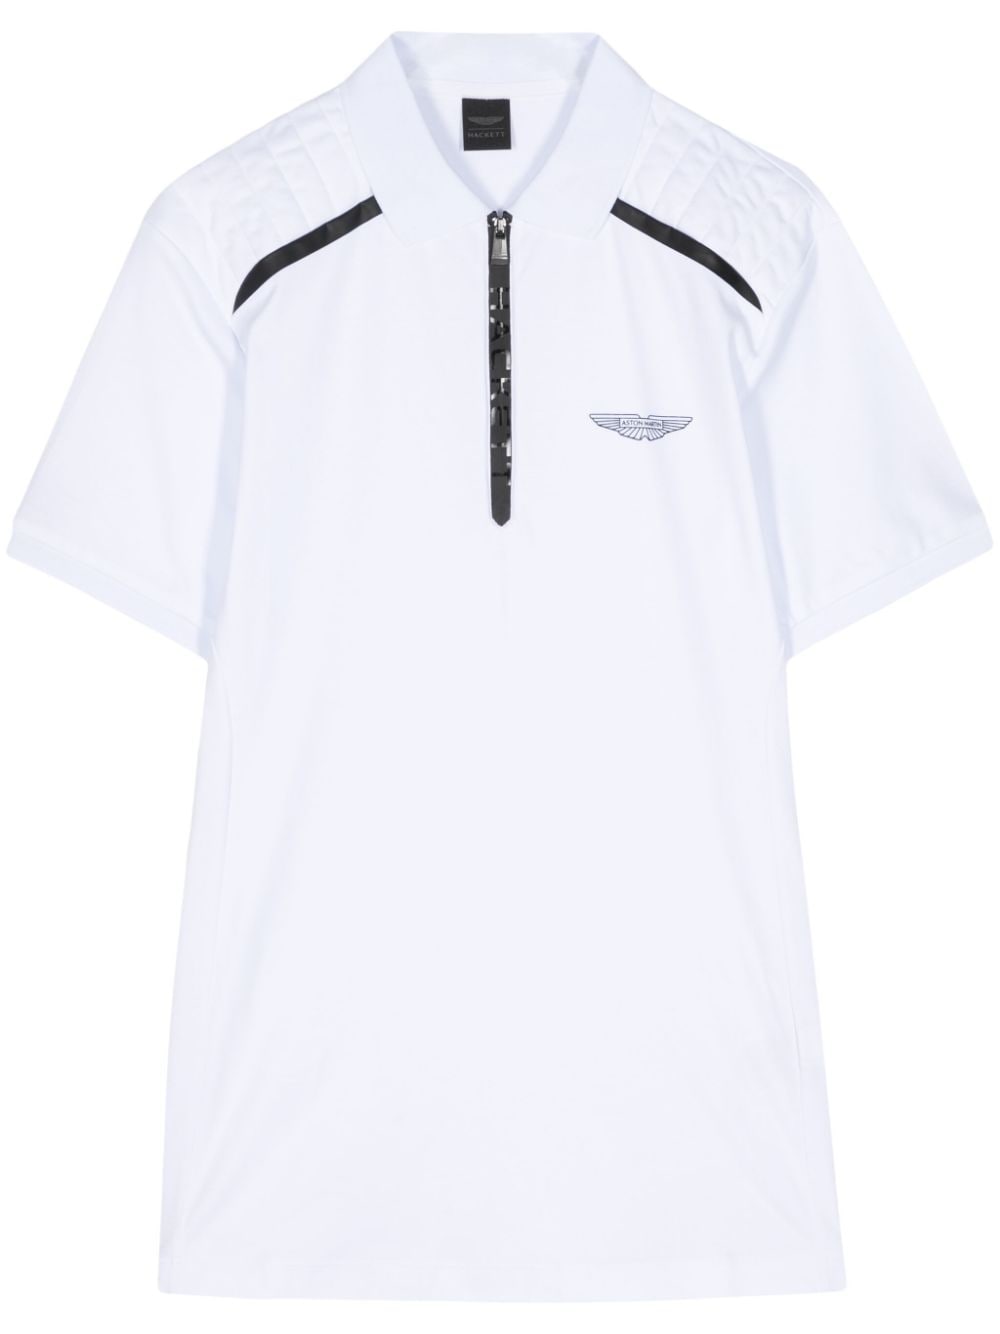 Hackett Aston Martin logo polo shirt - White von Hackett